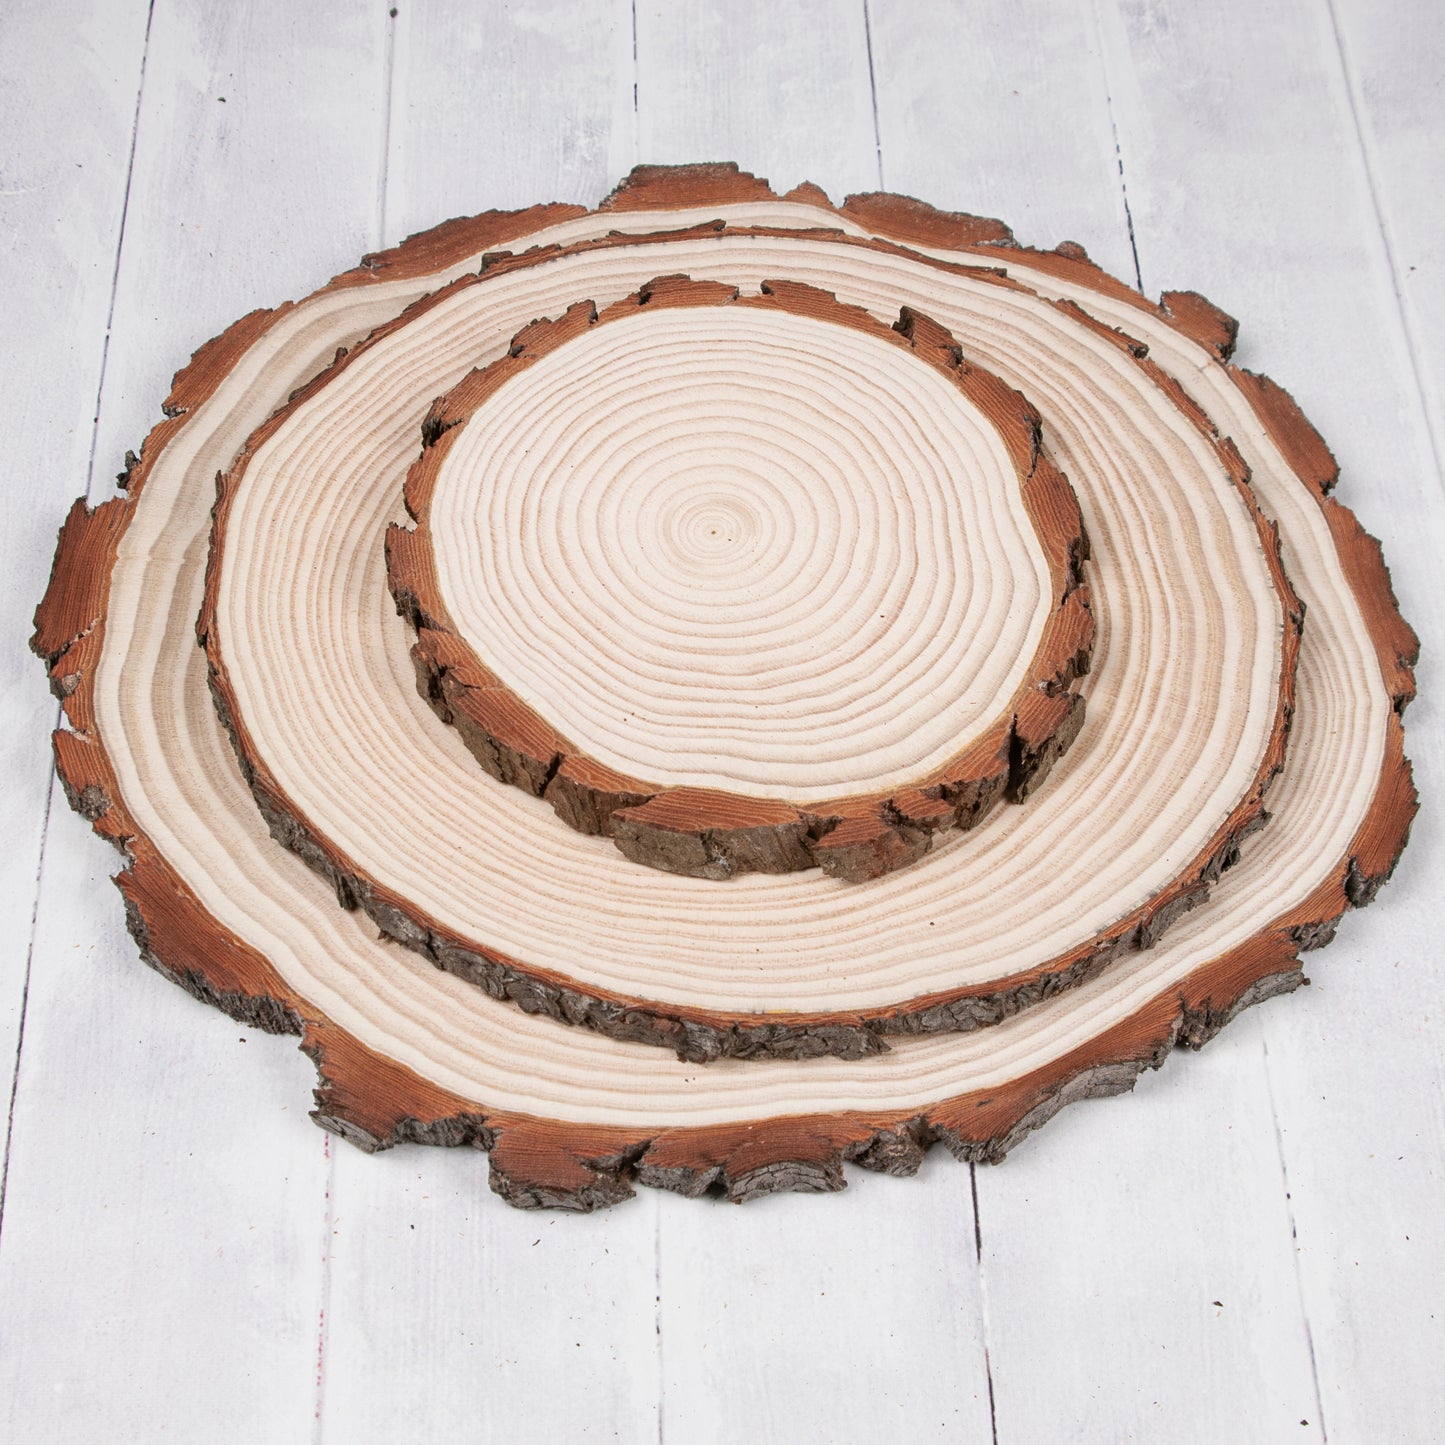 Pine Wood Slices - Sanded one side